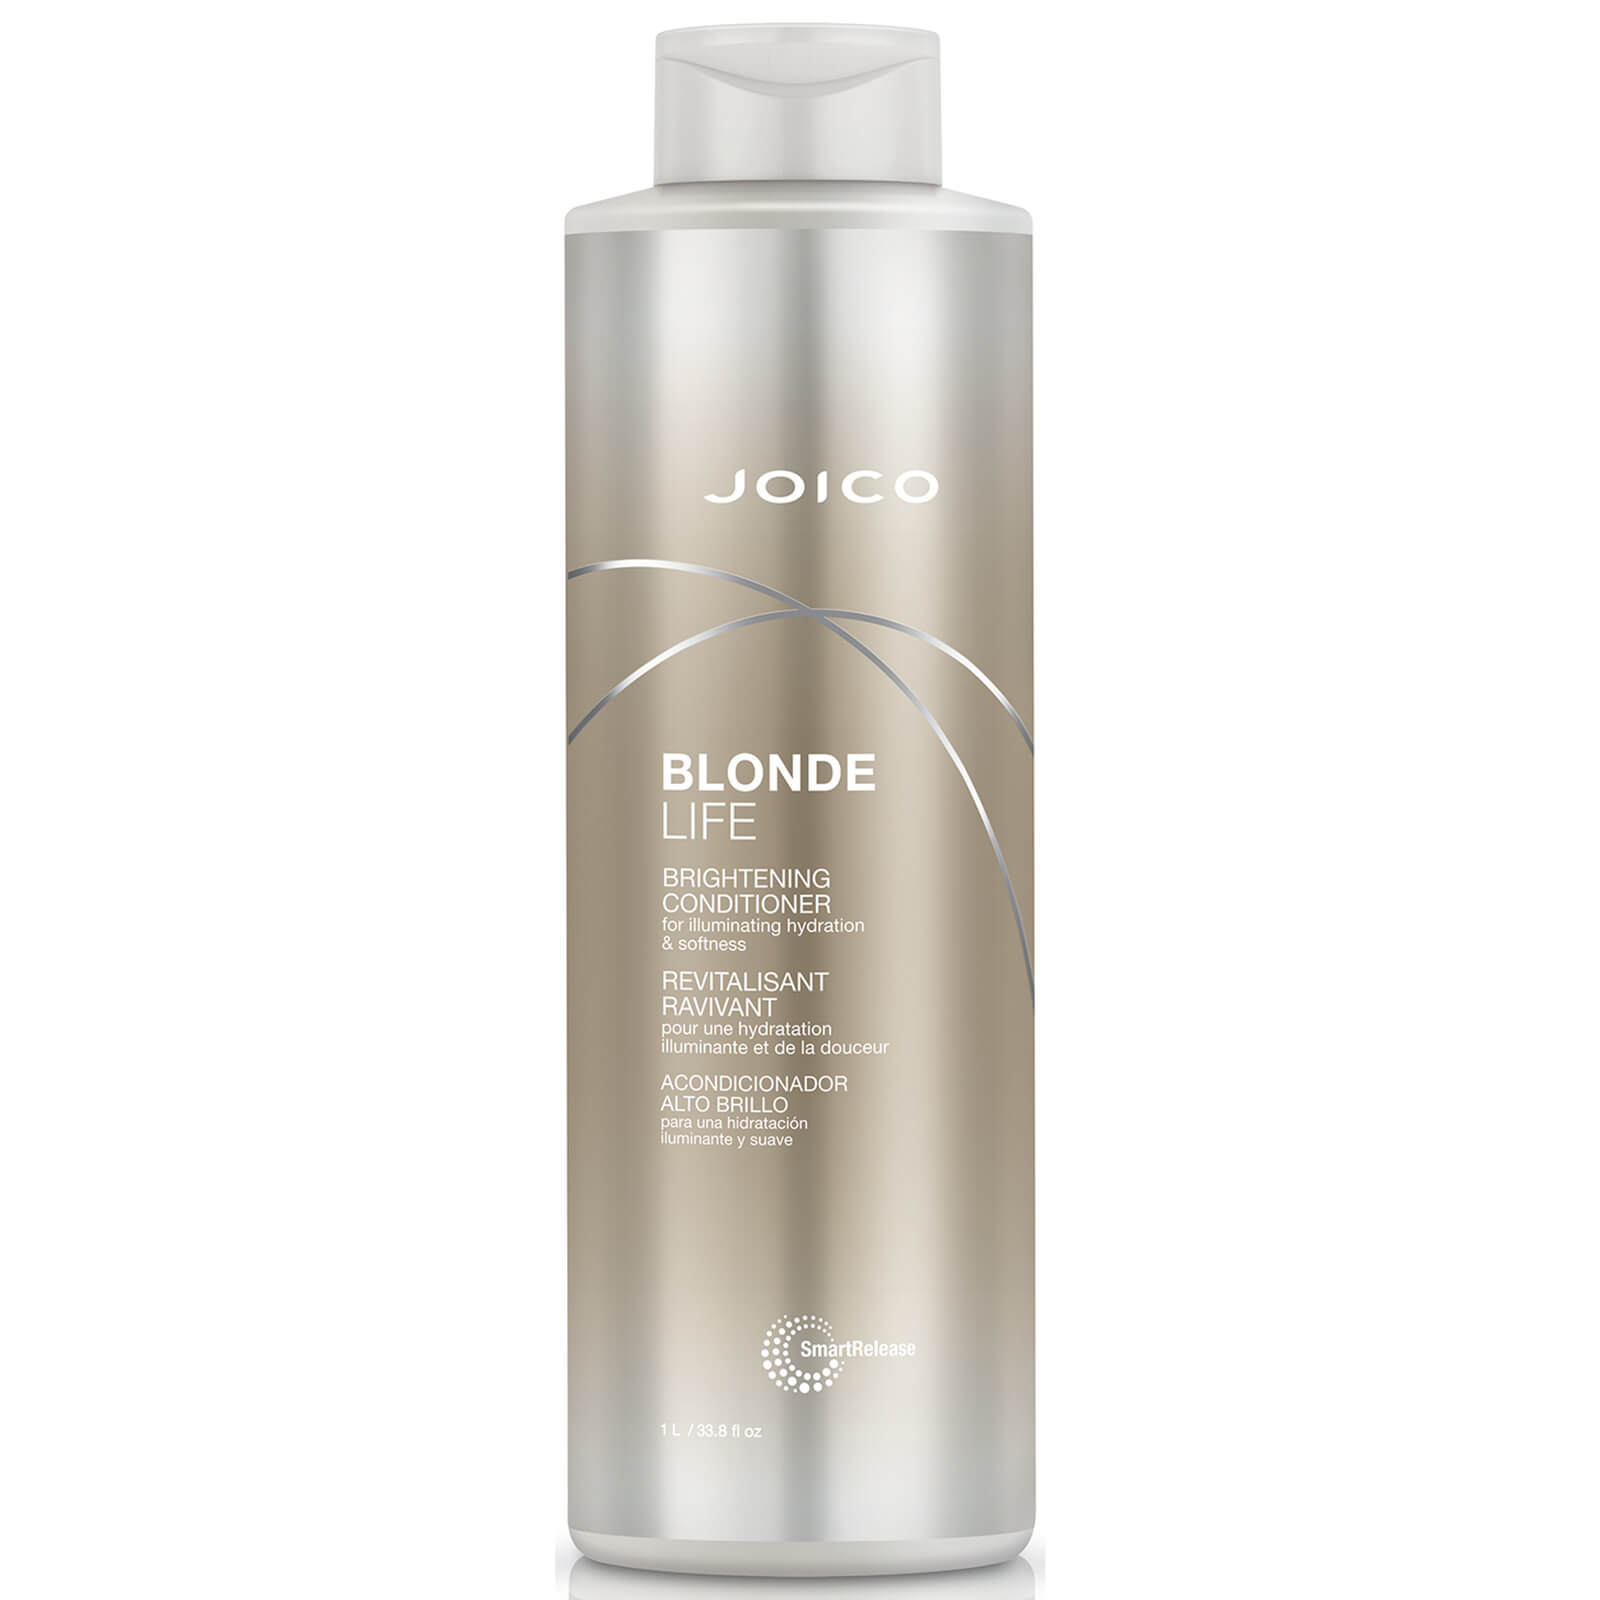 JOICO Blonde Life Brightening Conditioner 1000ml (Worth £74.00)